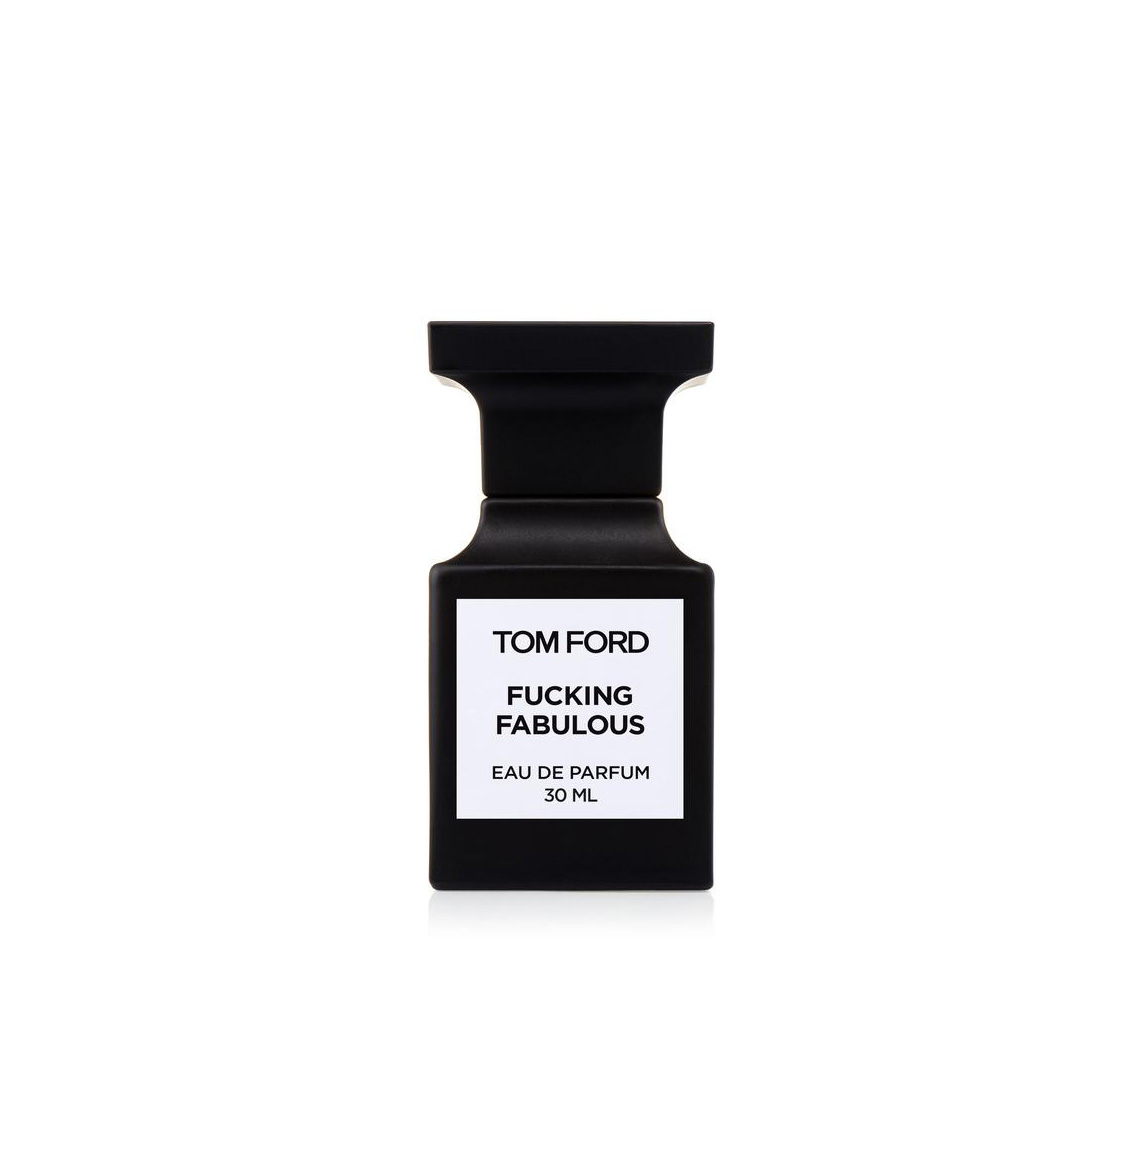 Tom Ford F******* Fabulous Eau de Parfum 30ml EDP Spray